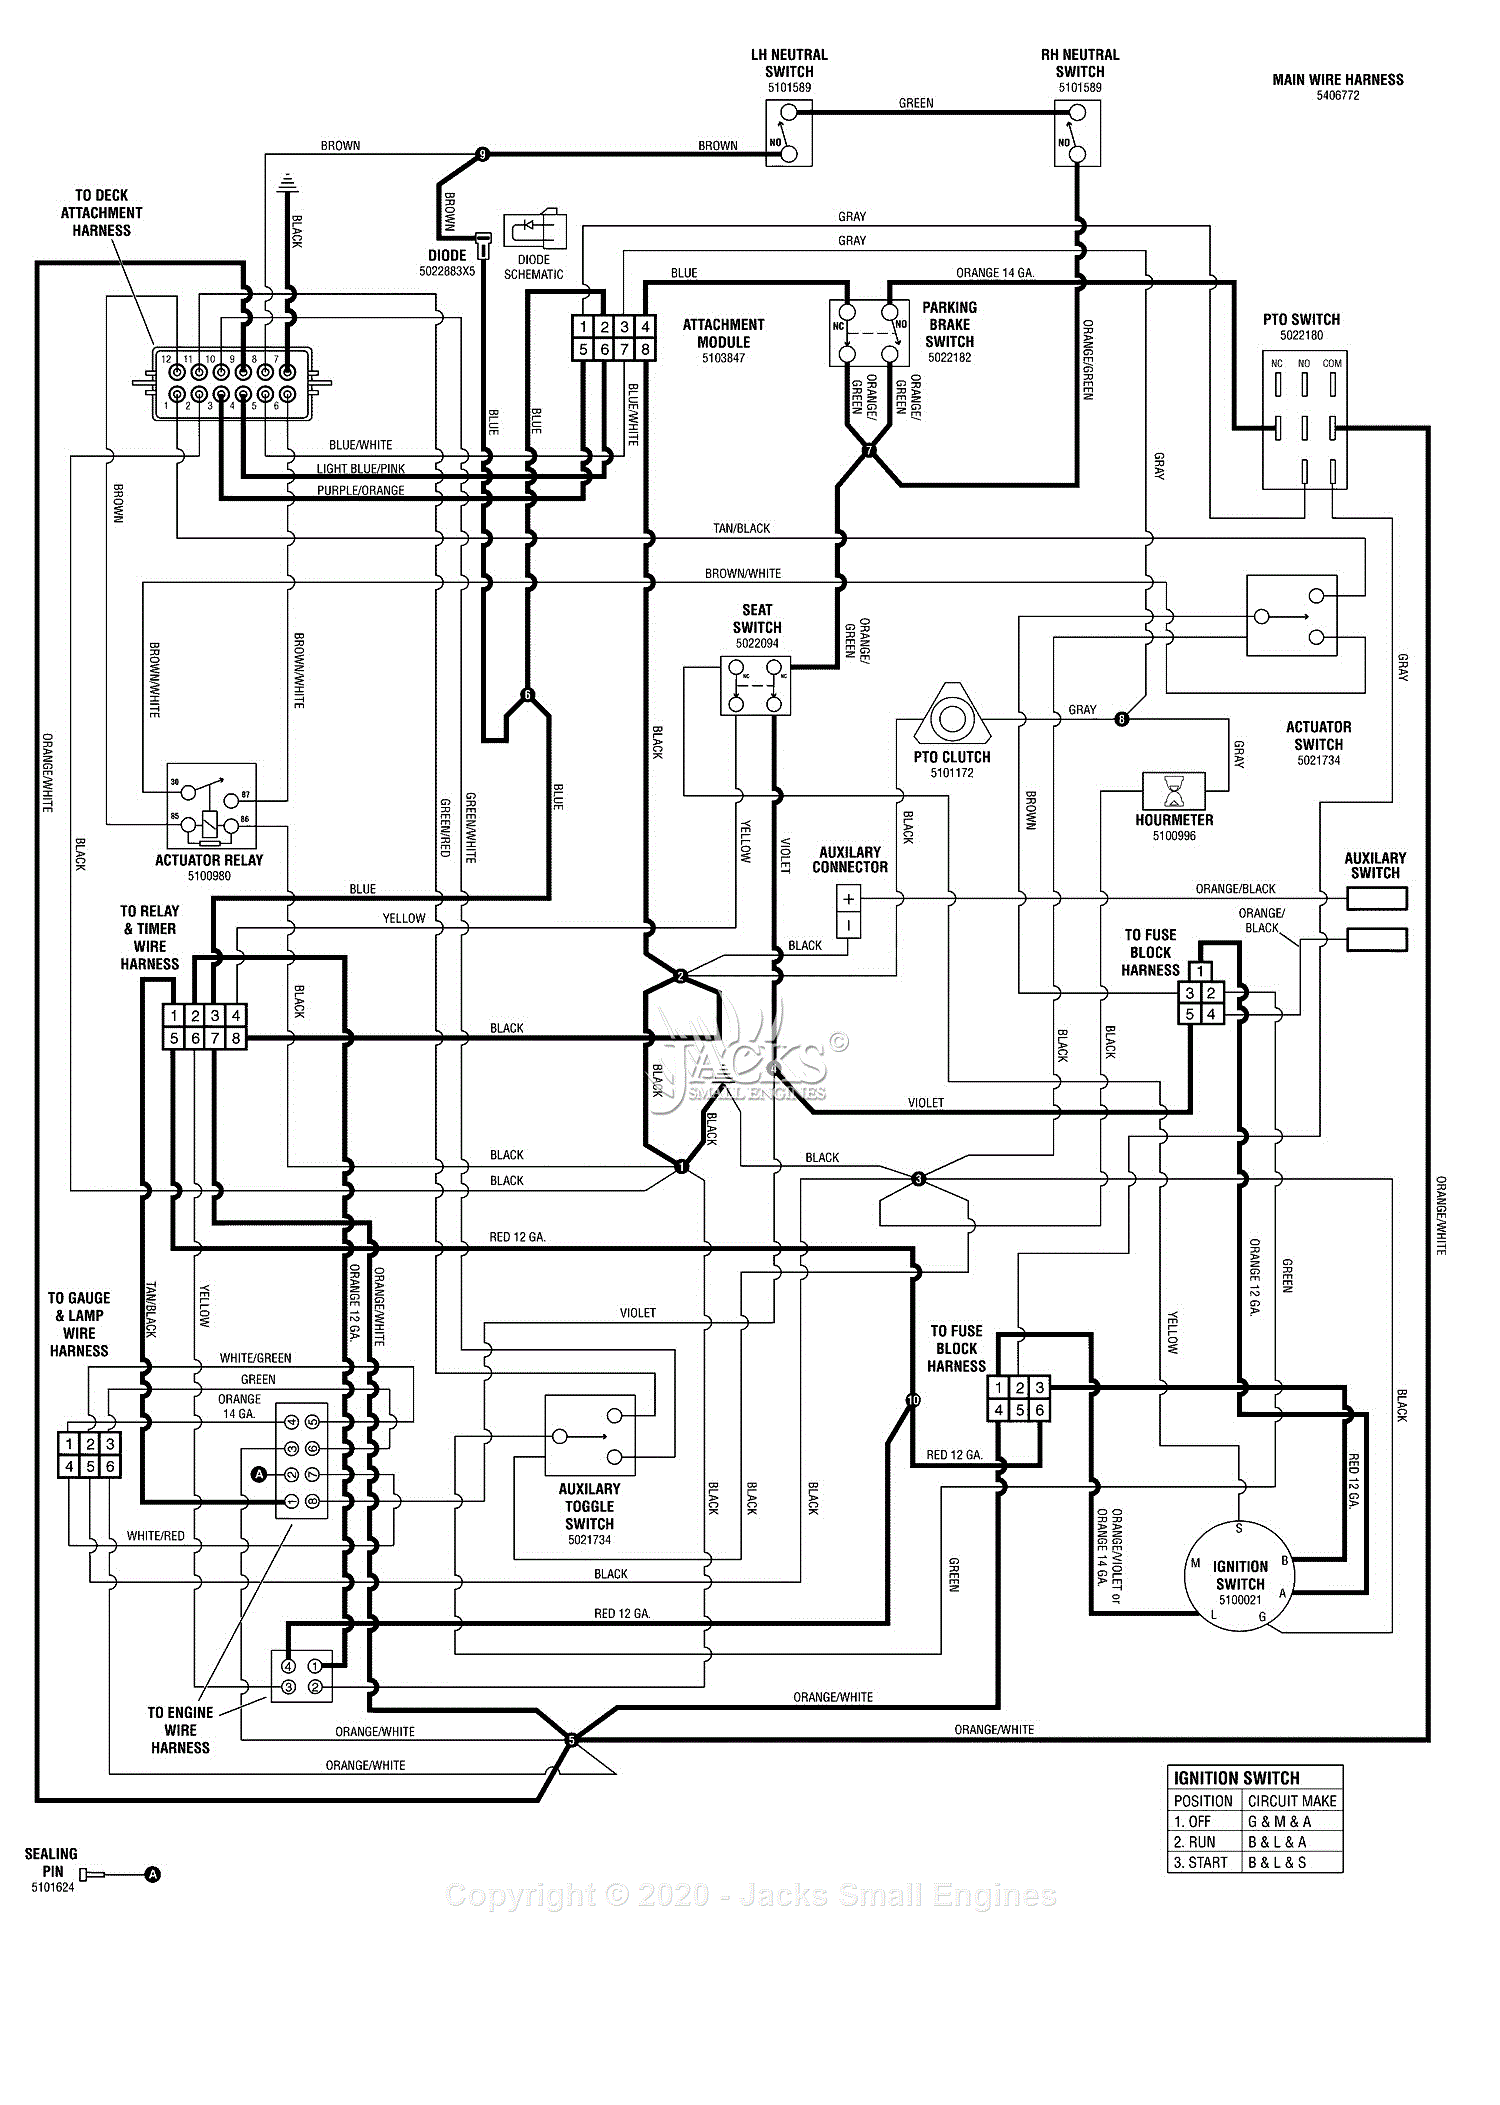 Ferris Electrical Schematics Parts Diagram for Electrical Schematic